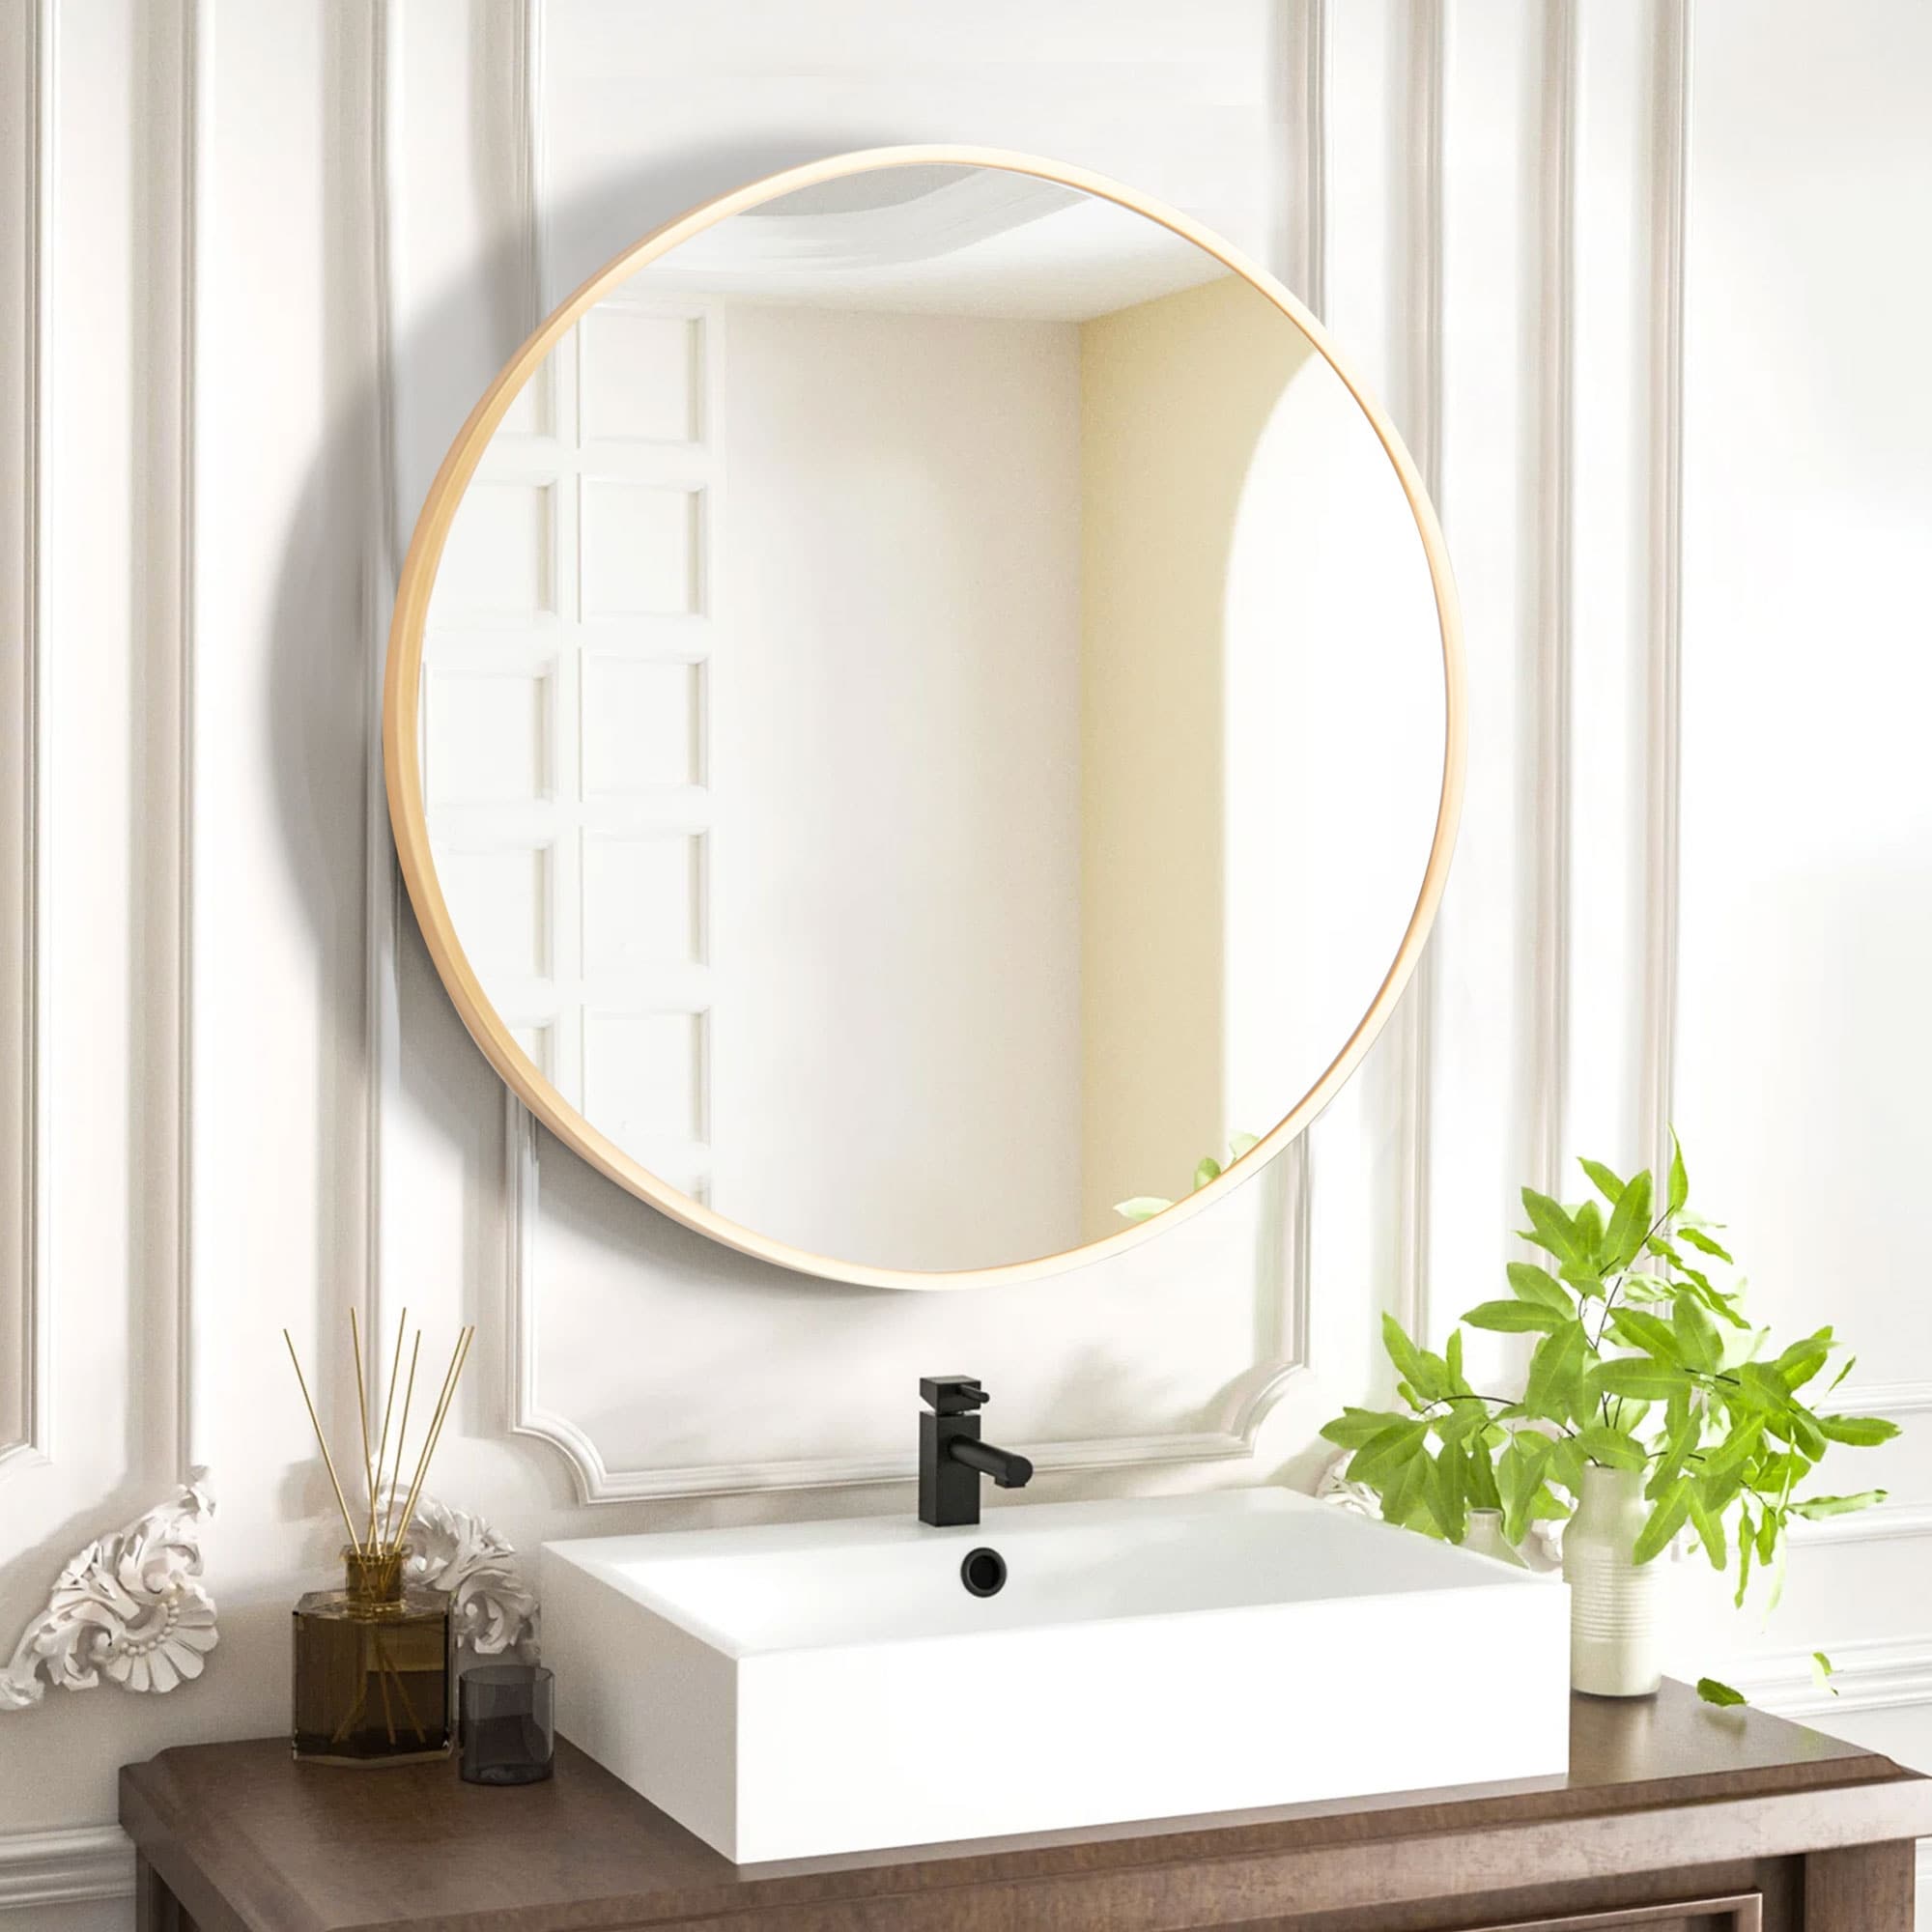 20" Modern Gold Round Metal Wall Mirror for Bathroom On Sale Bed Bath   Beyond 36654100